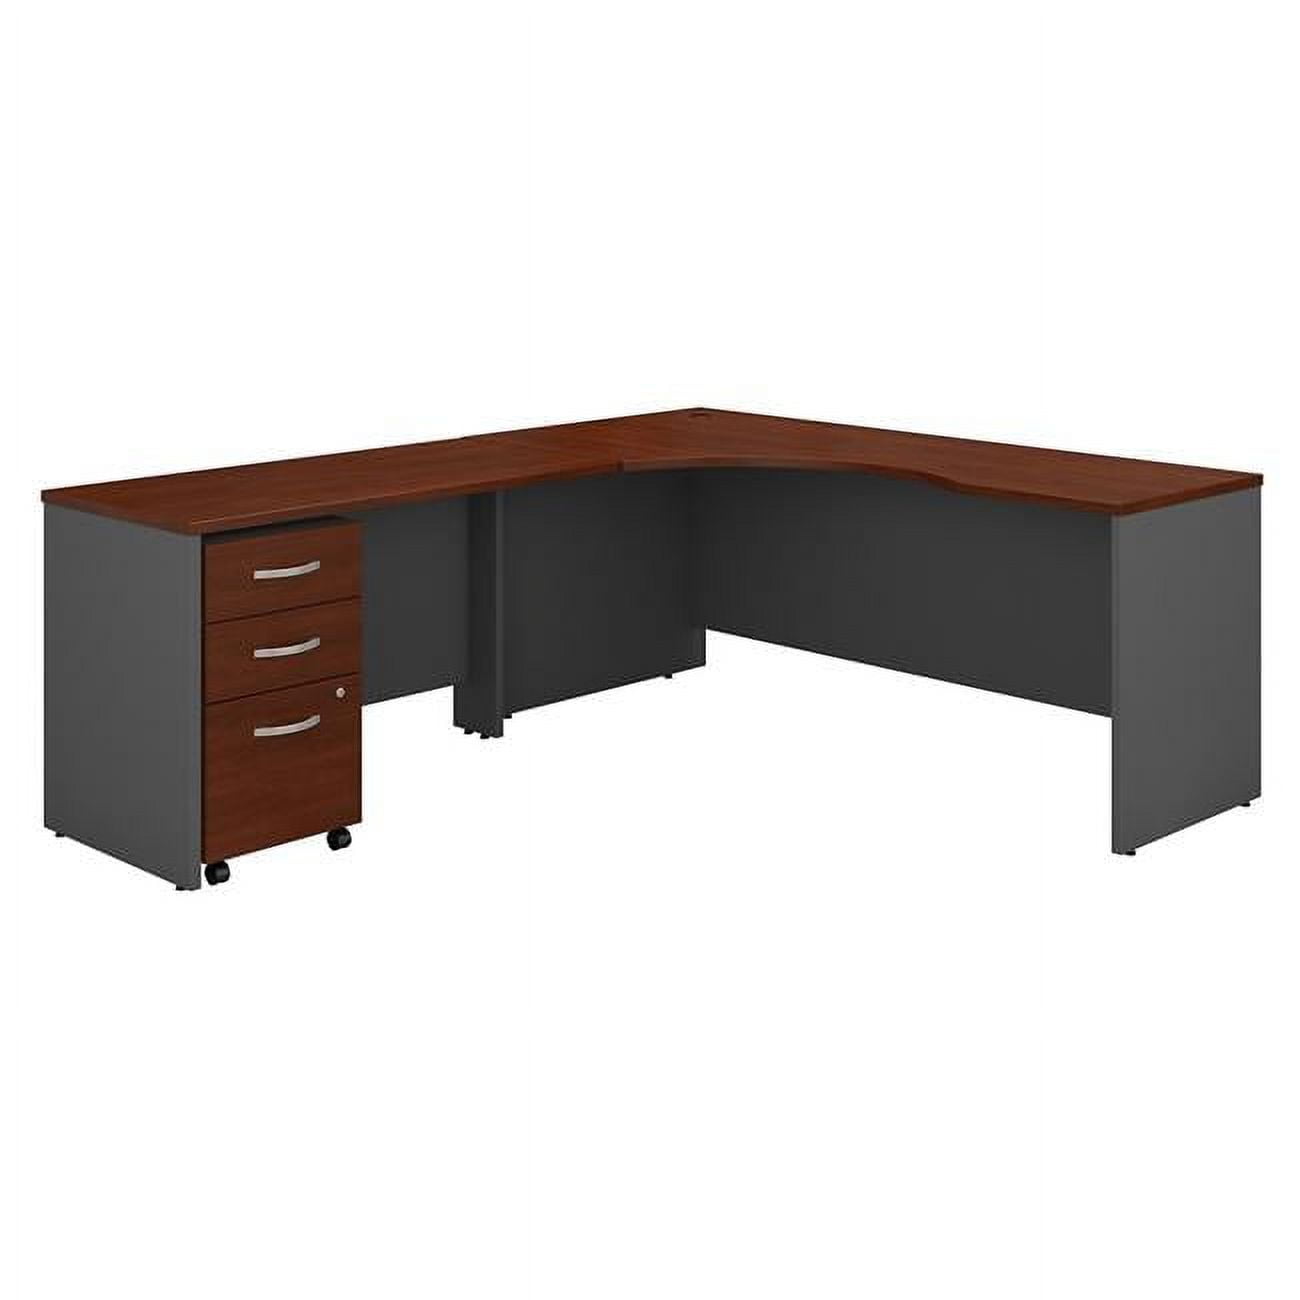 SRC086HCSU 72 in. Series C Left Handed Corner Desk with 48 in. Return & Mobile File Cabinet - Hansen Cherry -  Bush Business Furniture